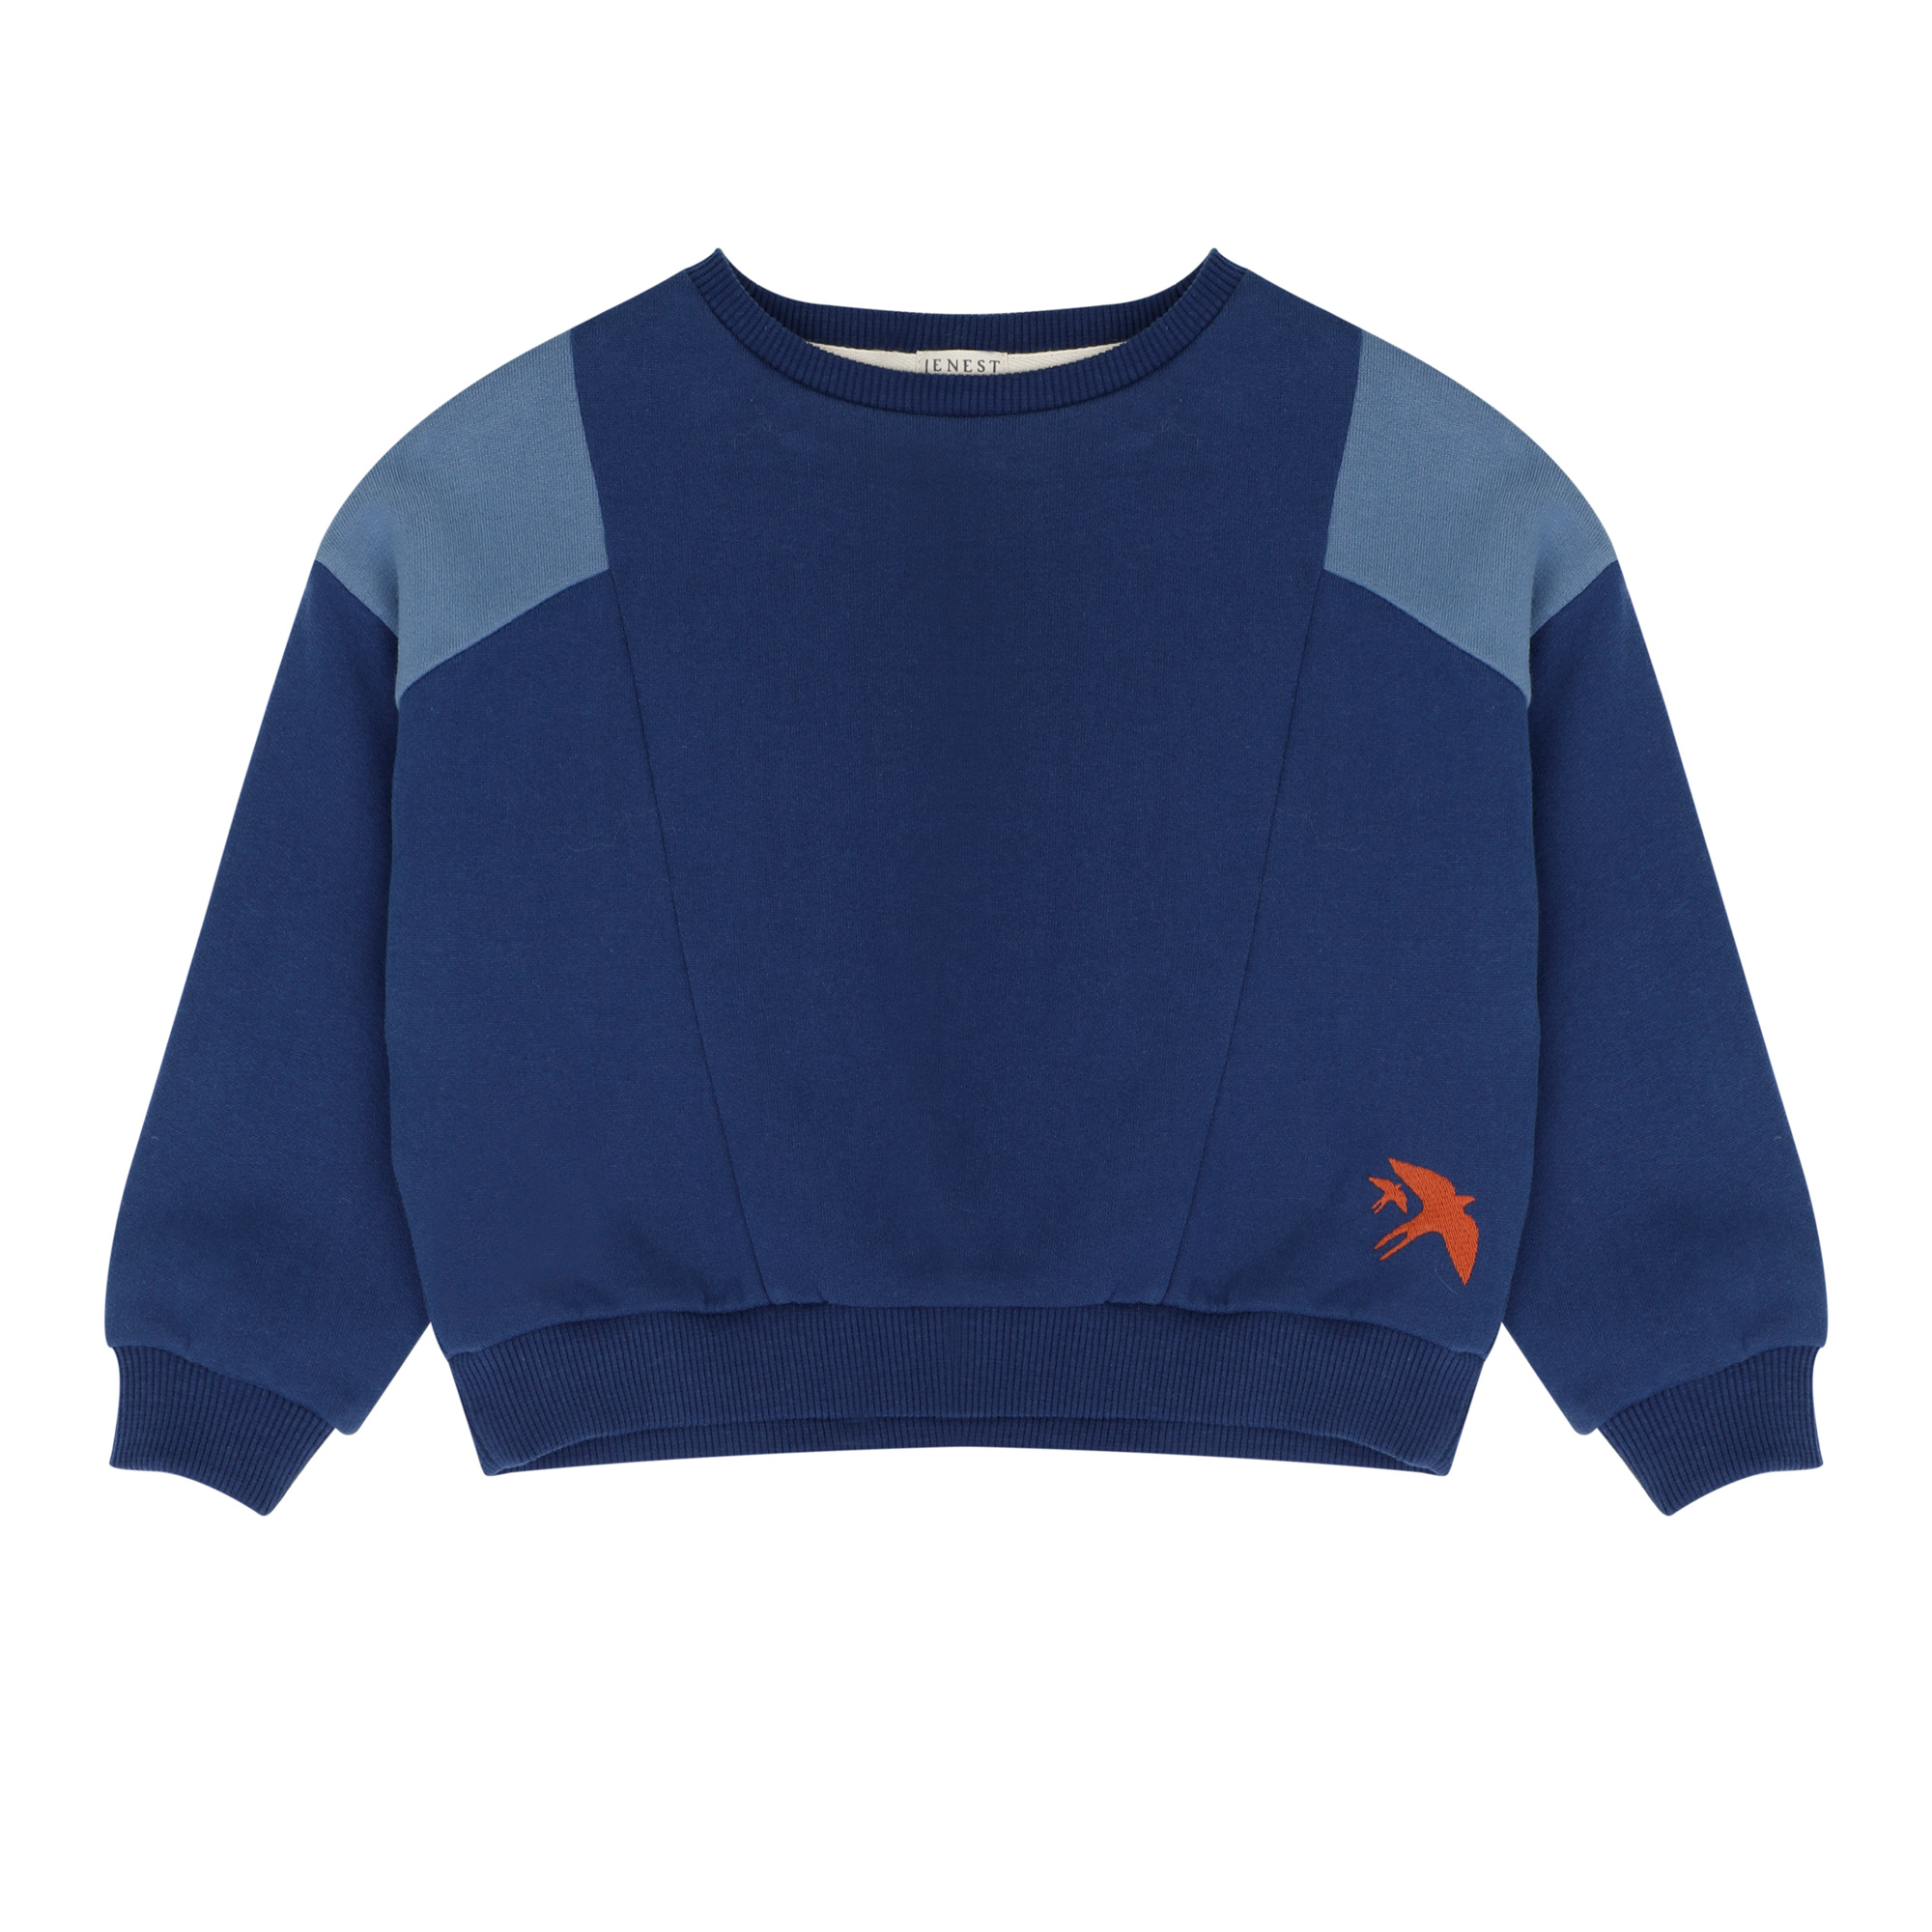 Nest sweater marine blue-1